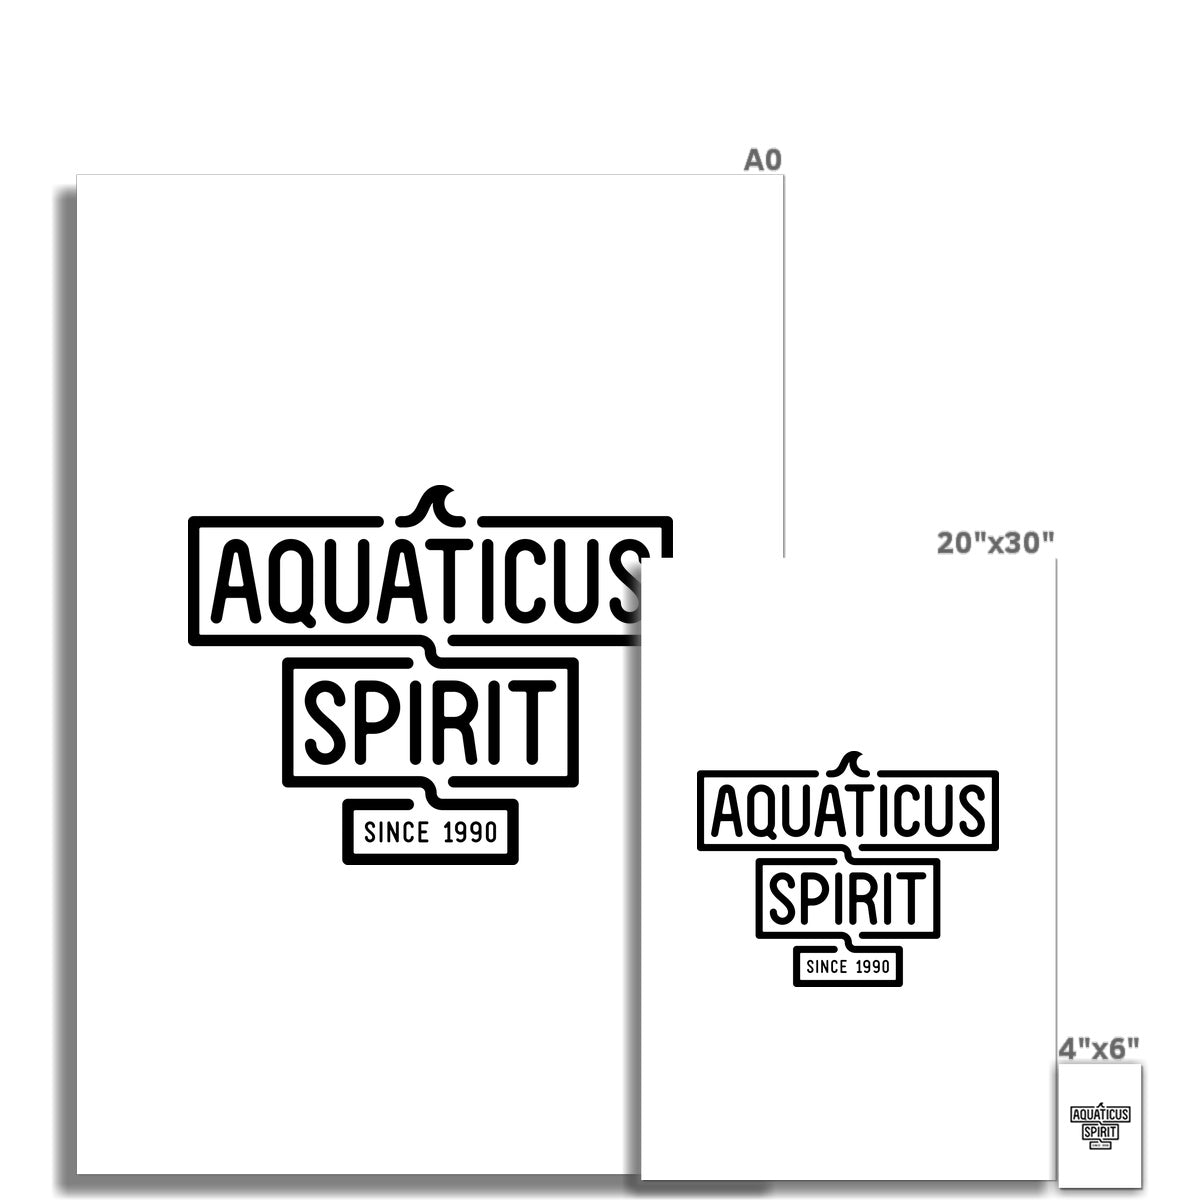 AQUA - 02 - Aquaticus Spirit - Lona Enrolada